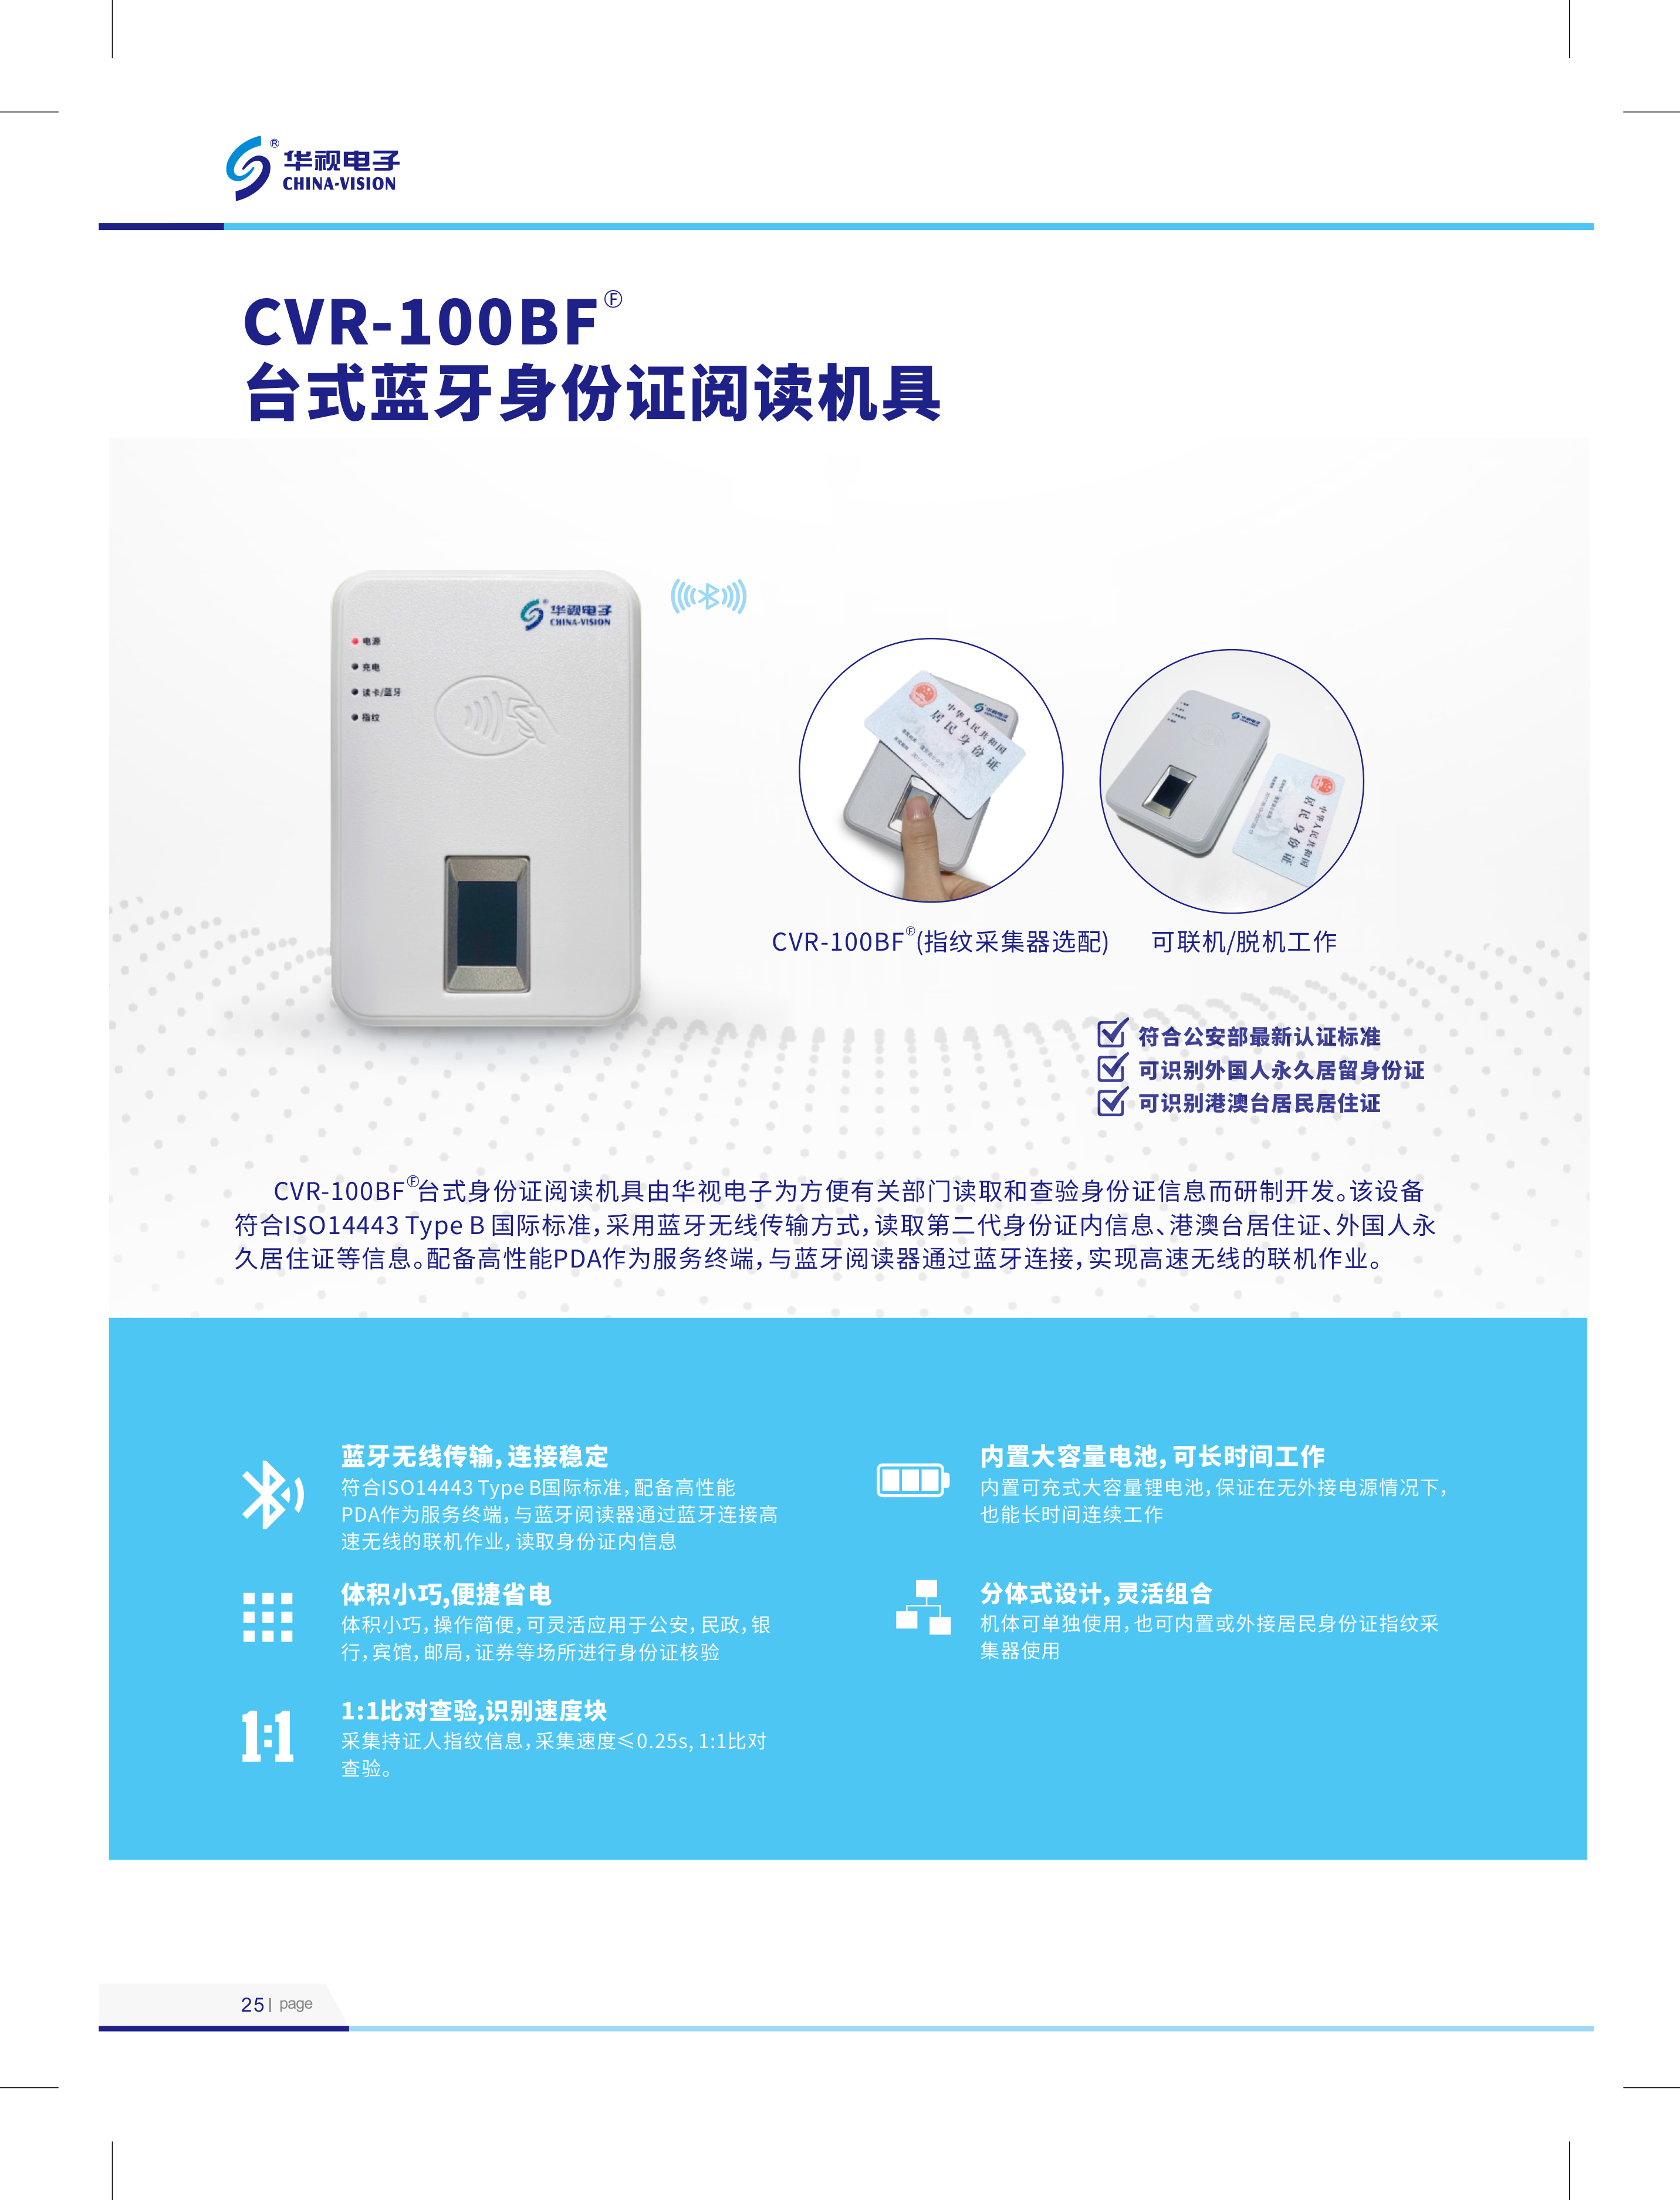 CVR-100BF蓝牙身份证阅读机具-1.jpg